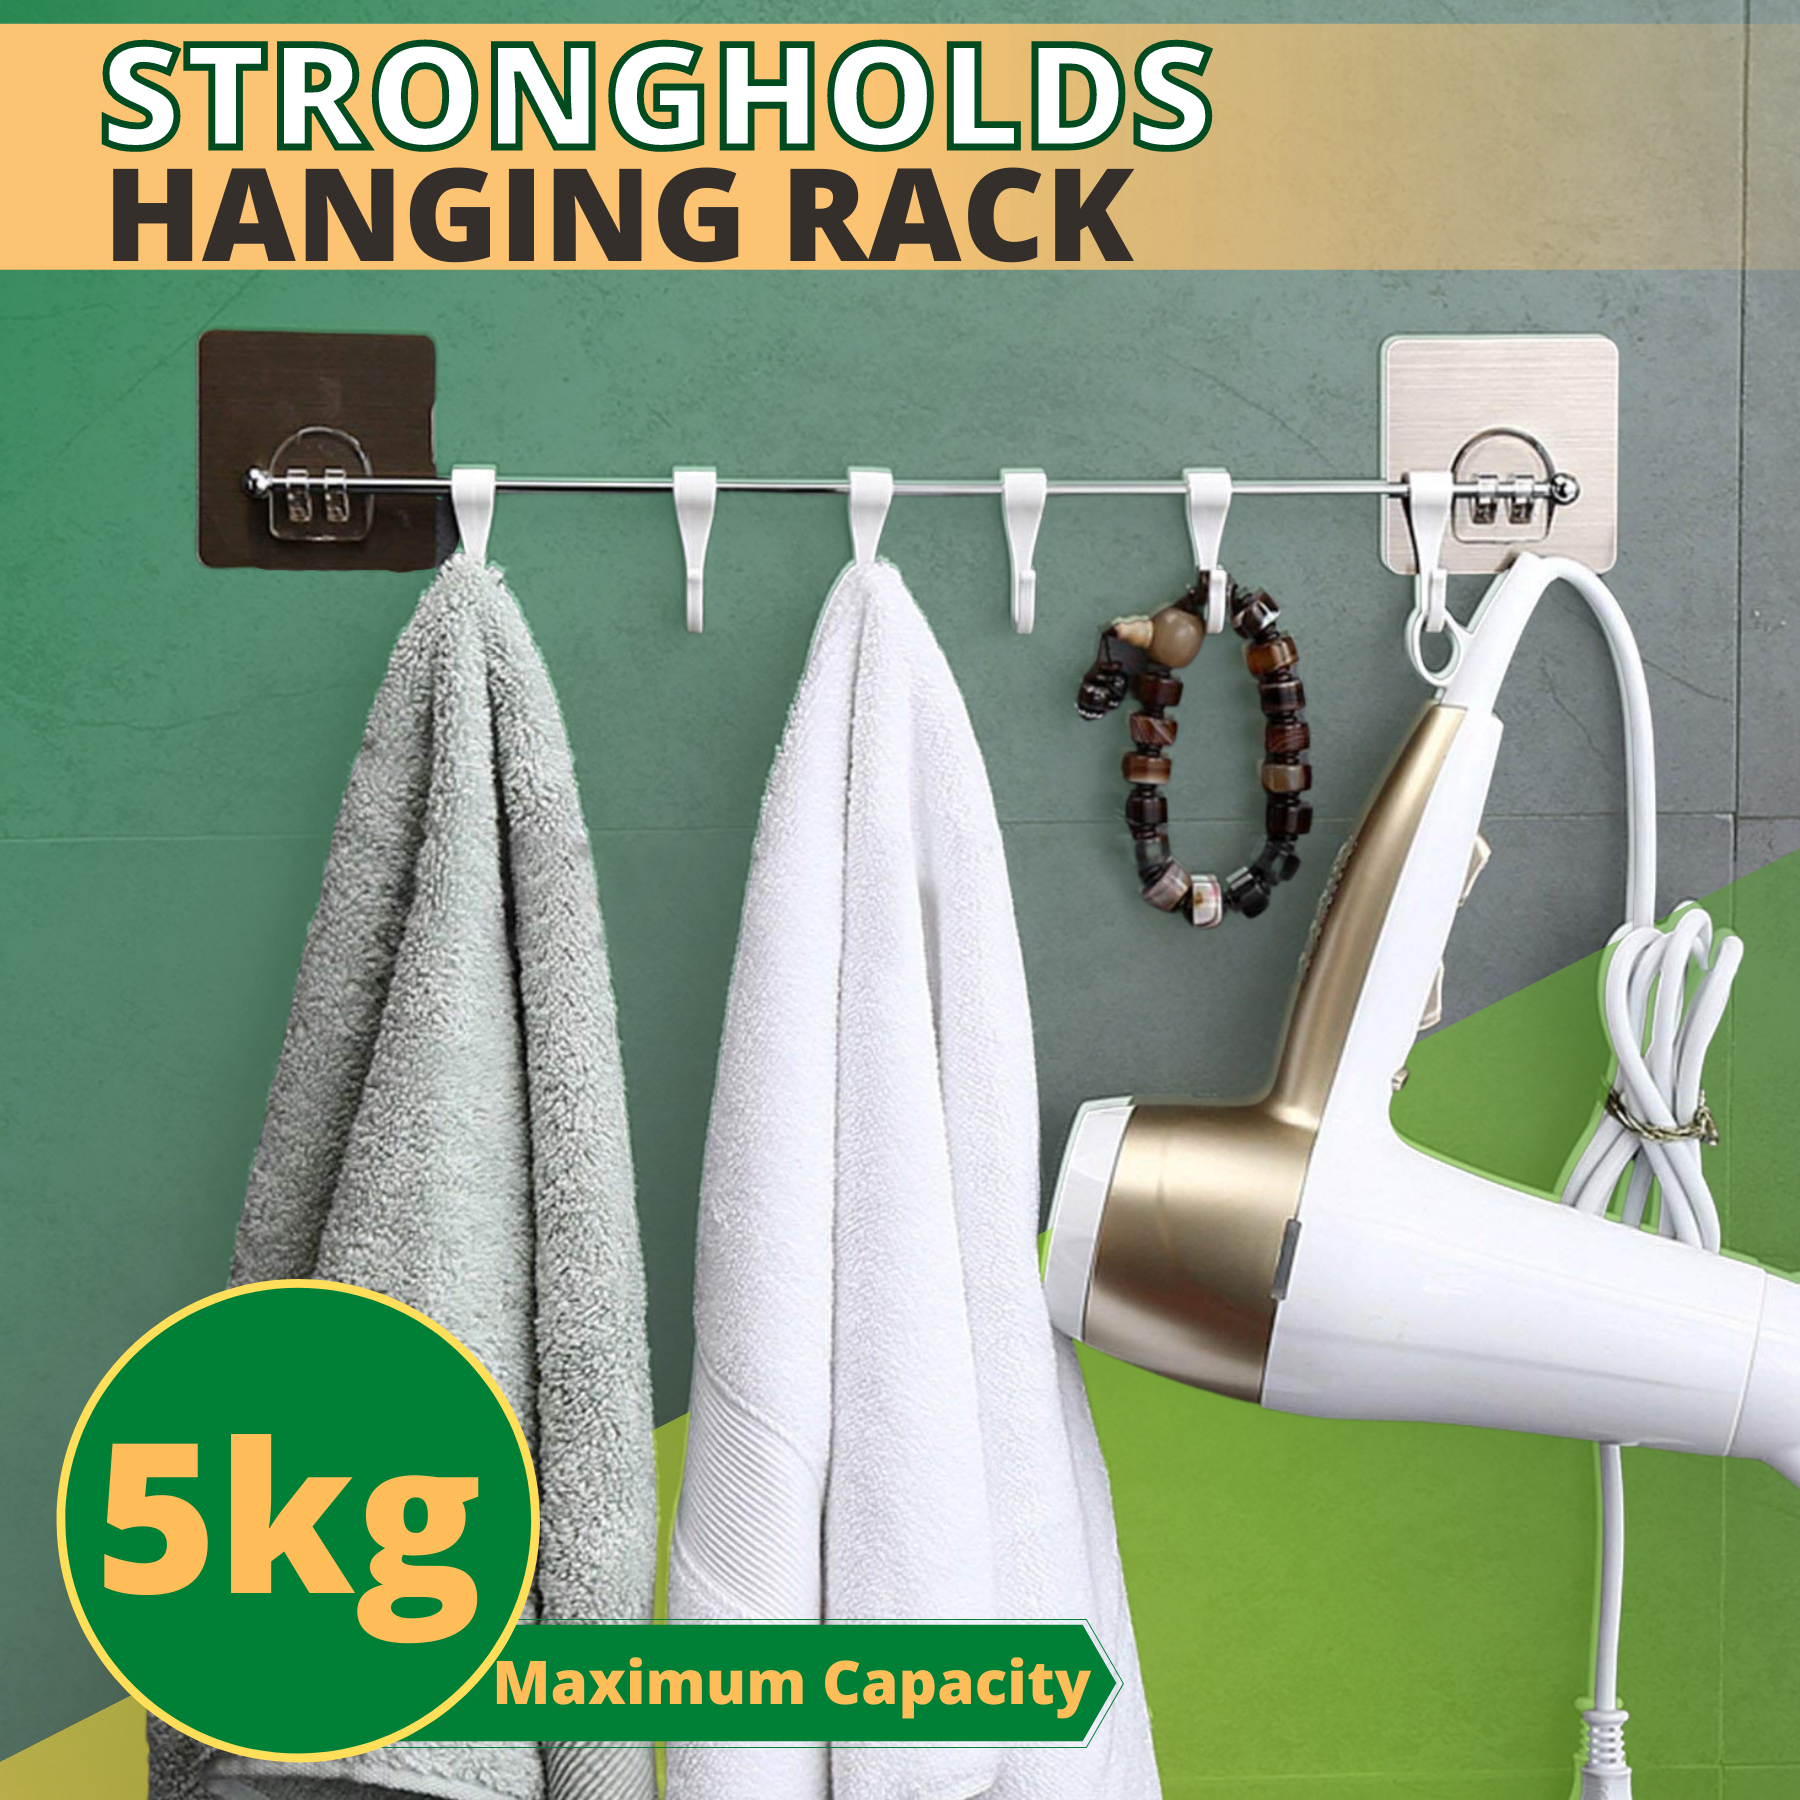 6 Hooks Self Adhesive Hanging Rack